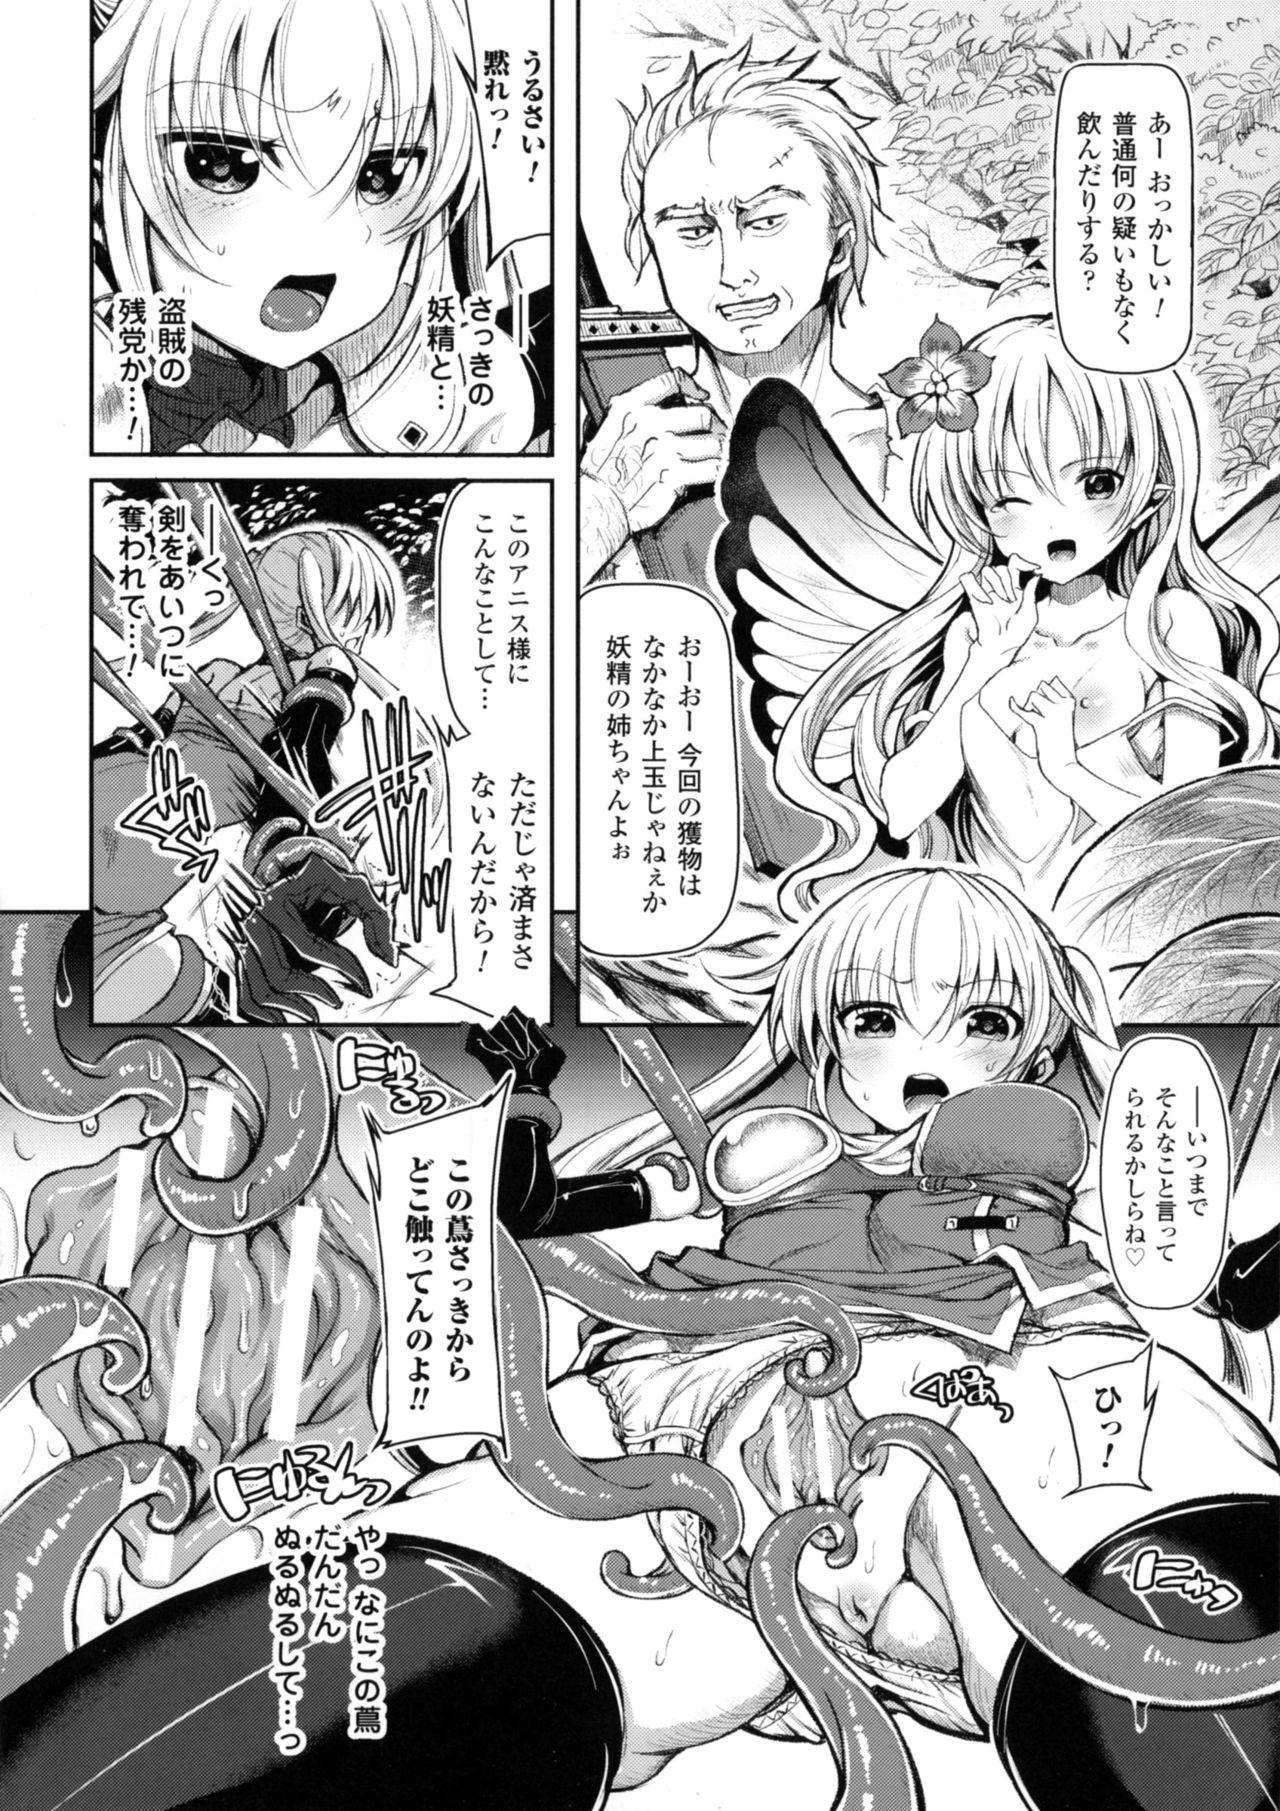 Seigi no Heroine Kangoku File DX Vol. 4 135